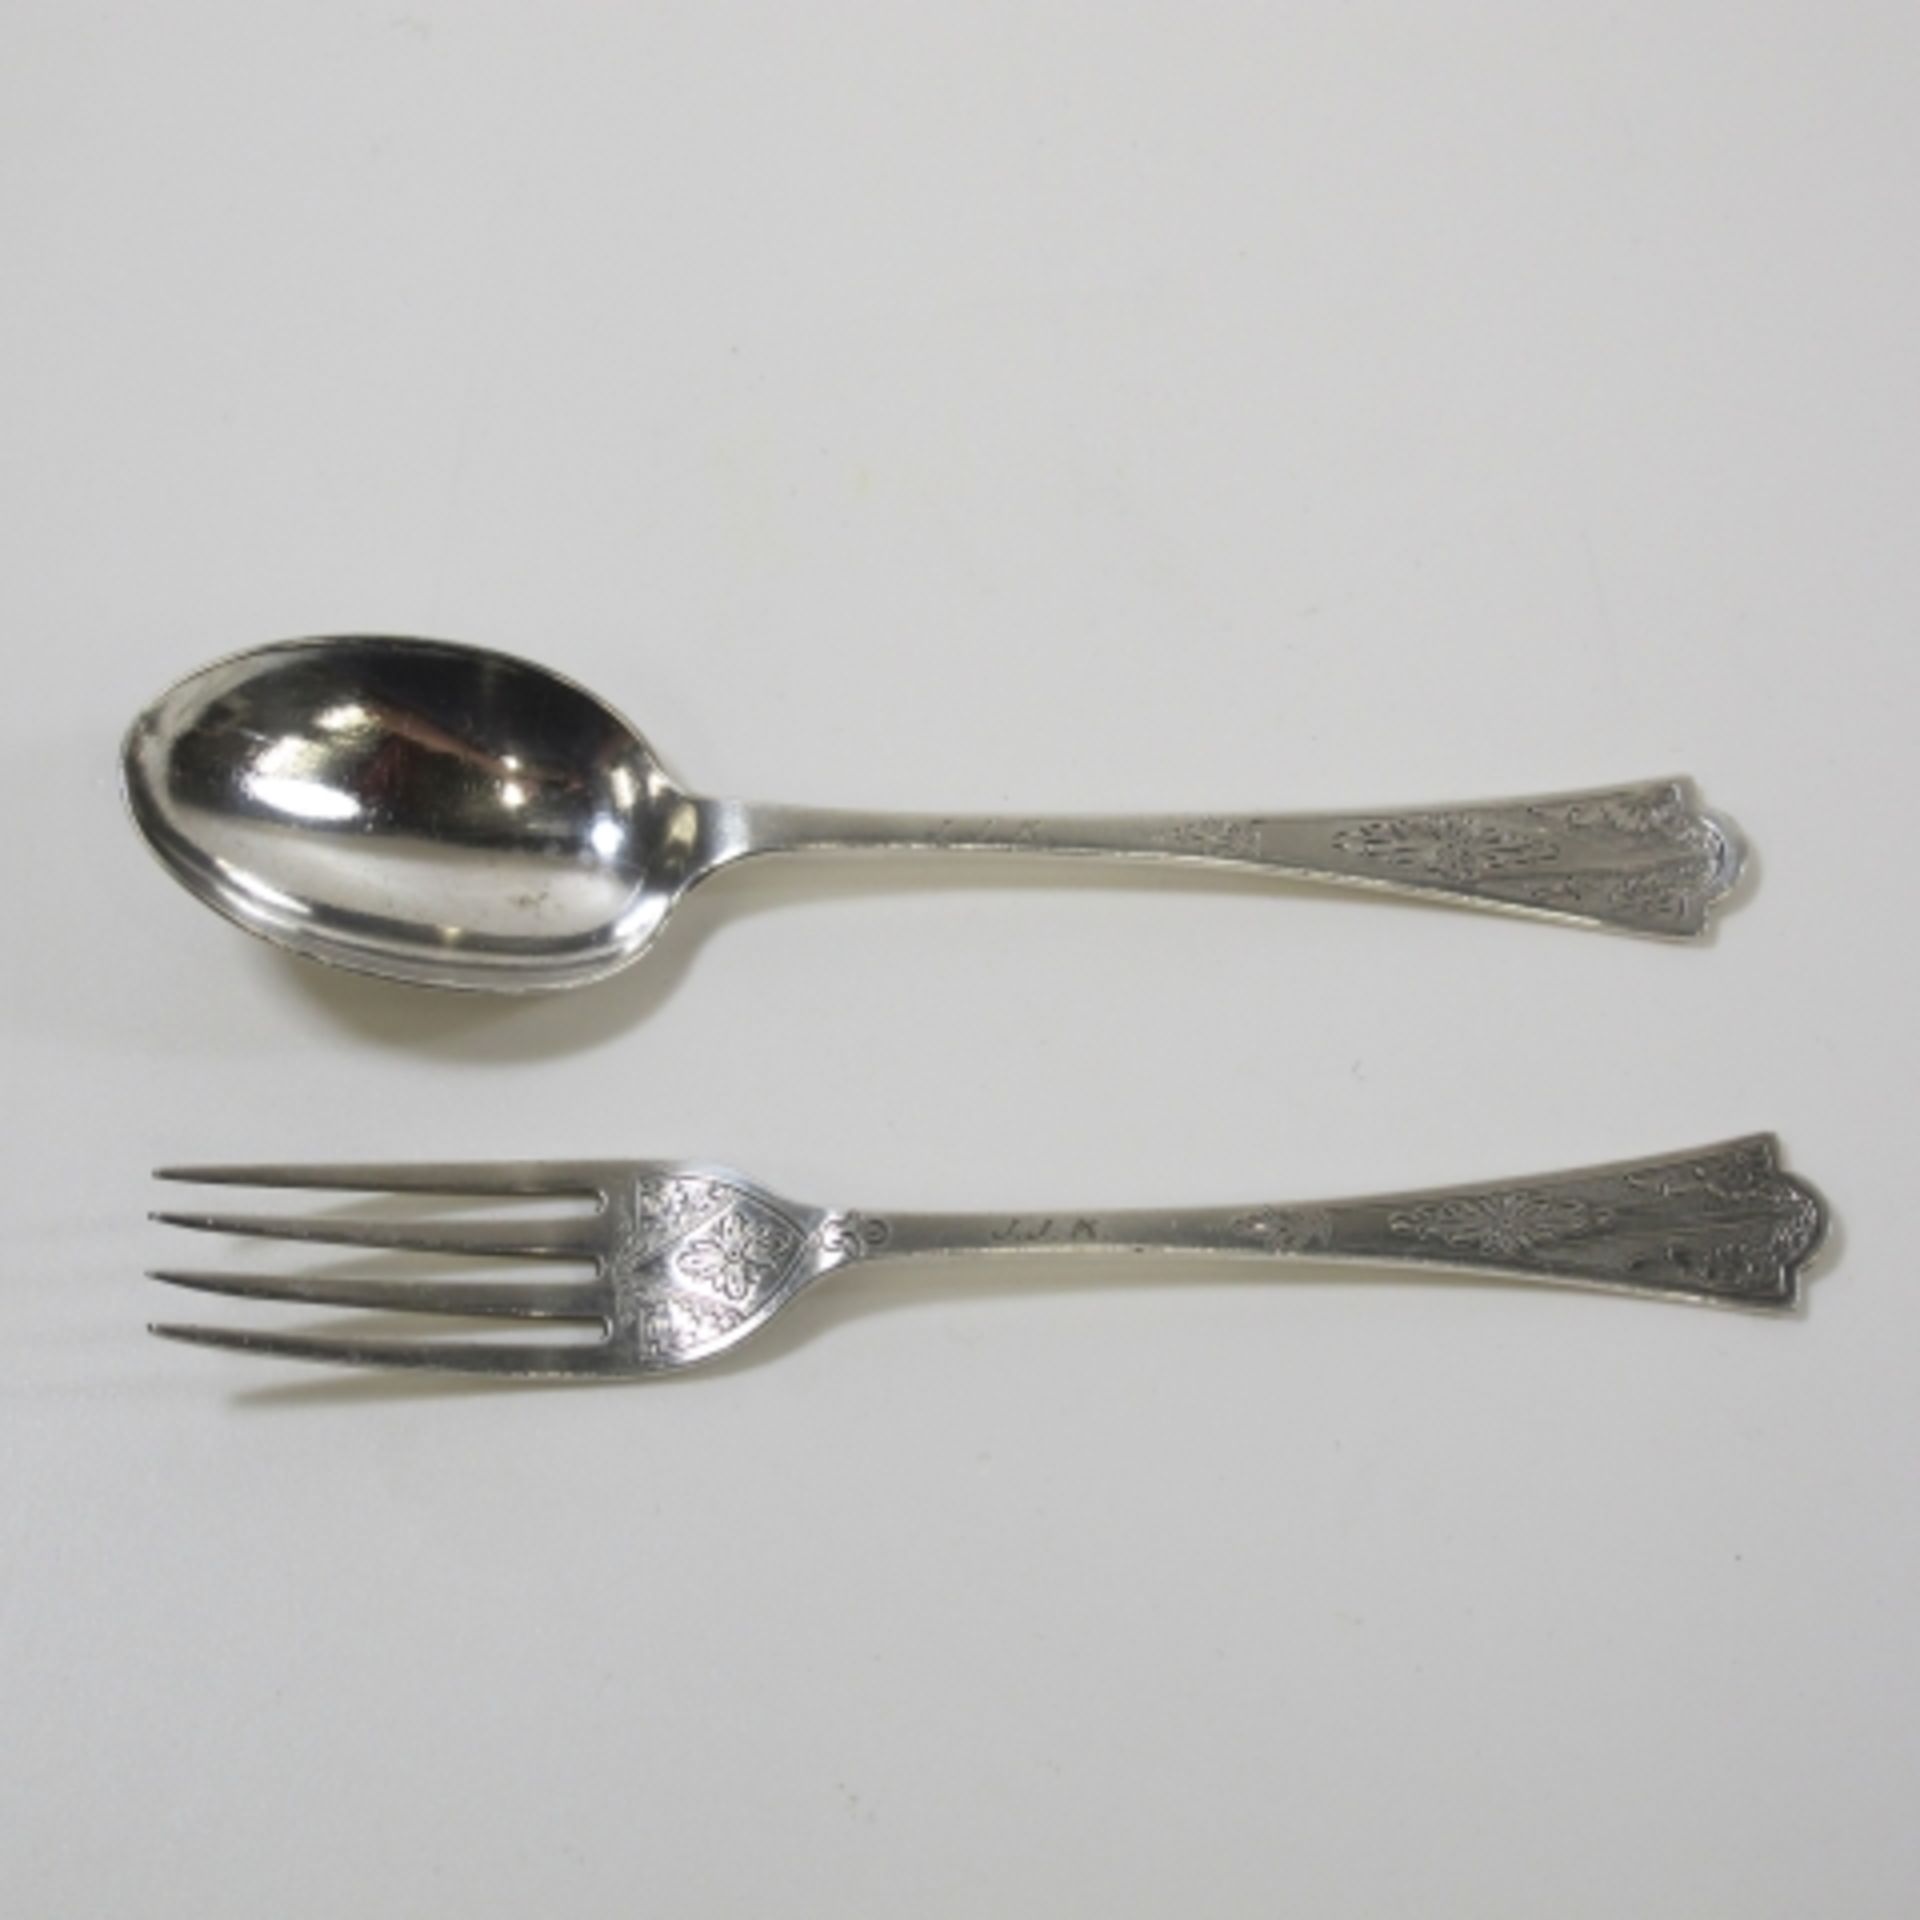 Antique Silver Christening spoon & fork (London 1891) 56g (est. £30 - £50)